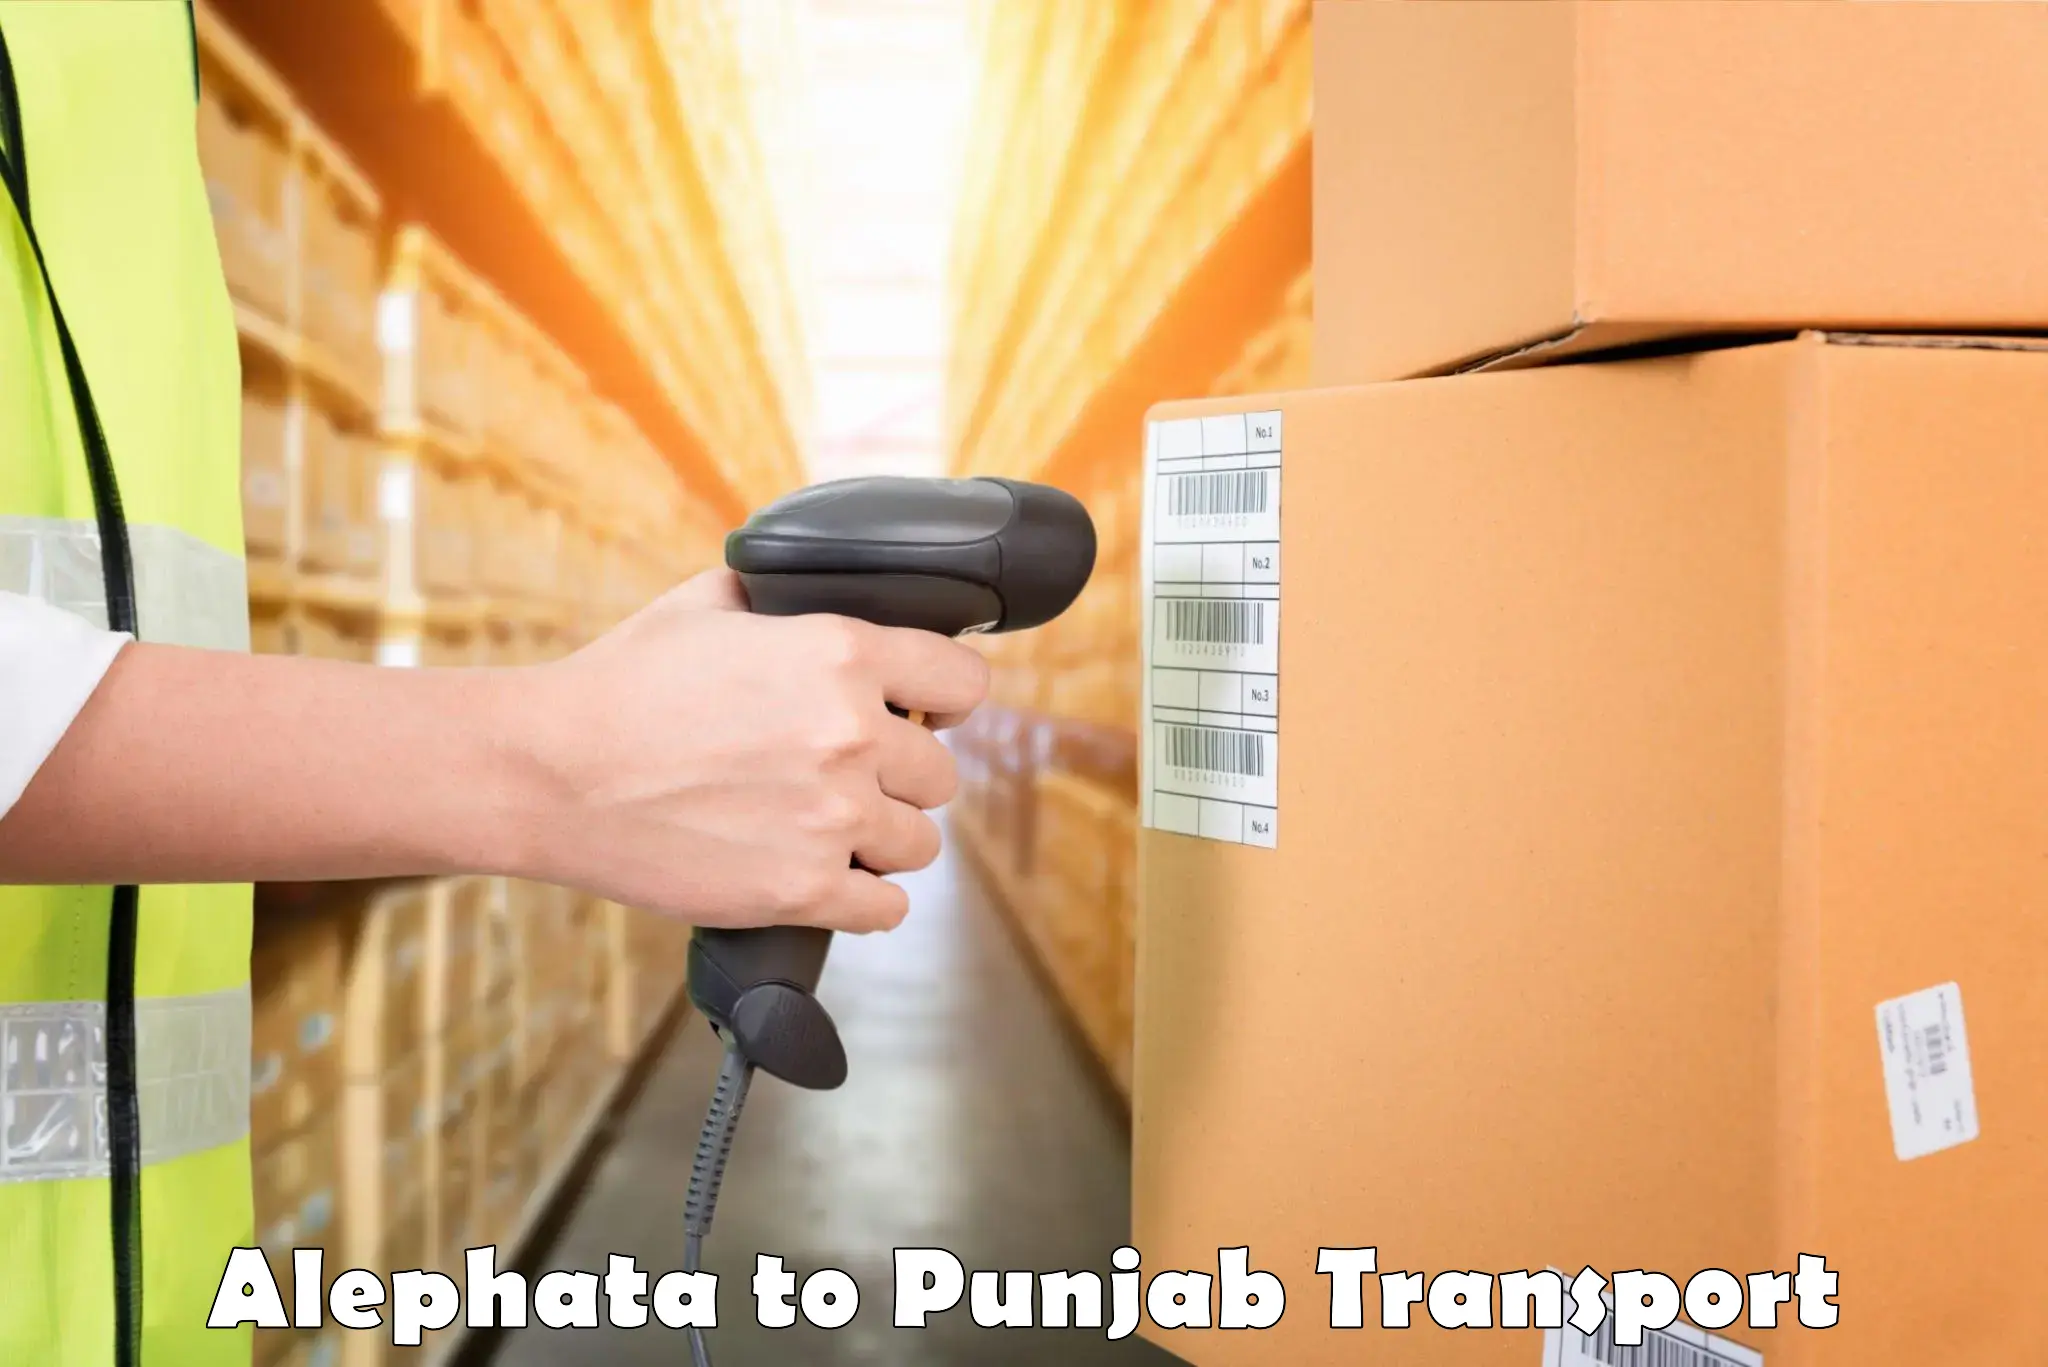 Daily transport service Alephata to Punjab